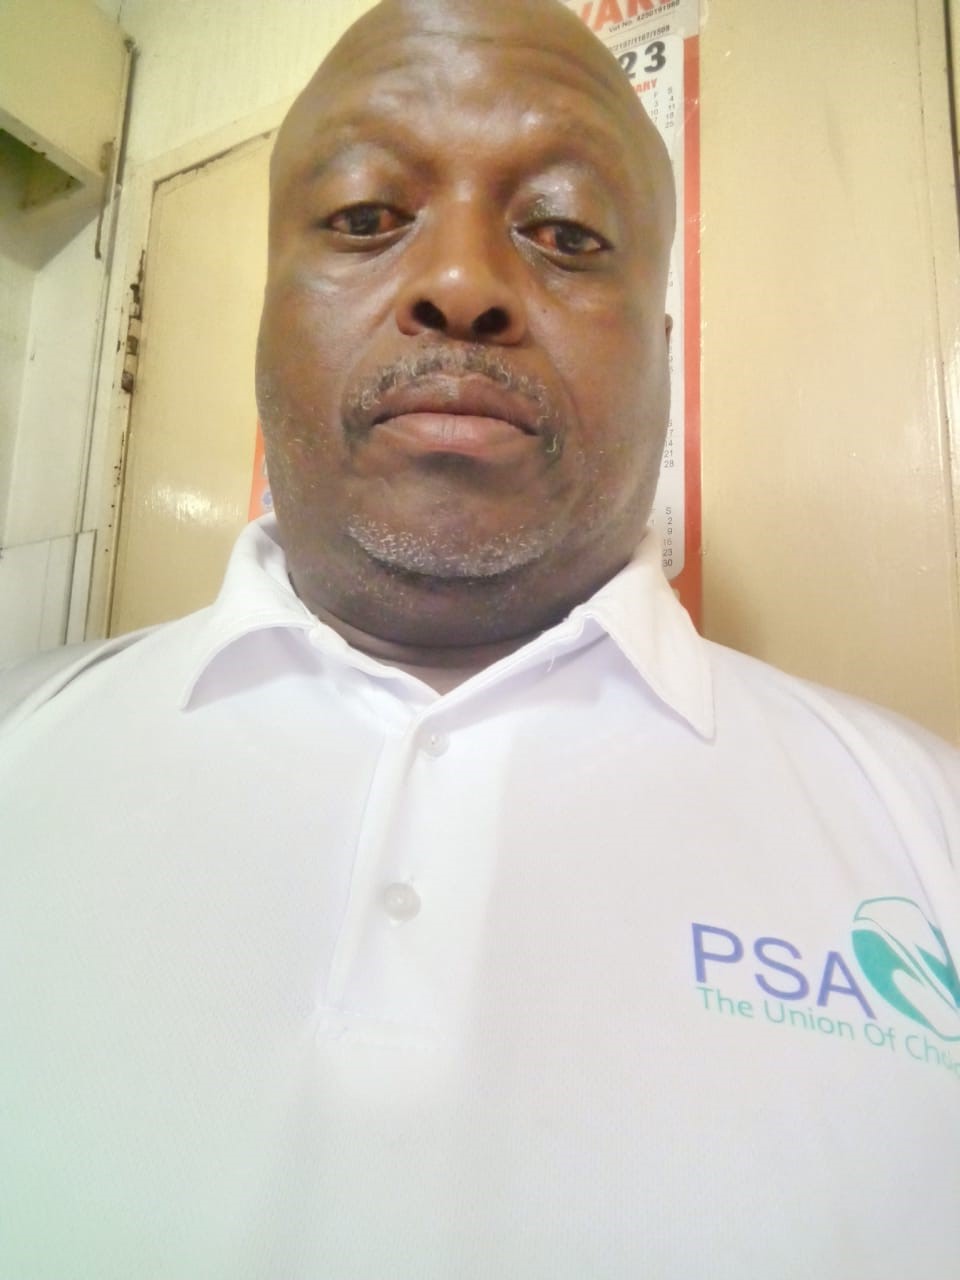 PSA Shop steward